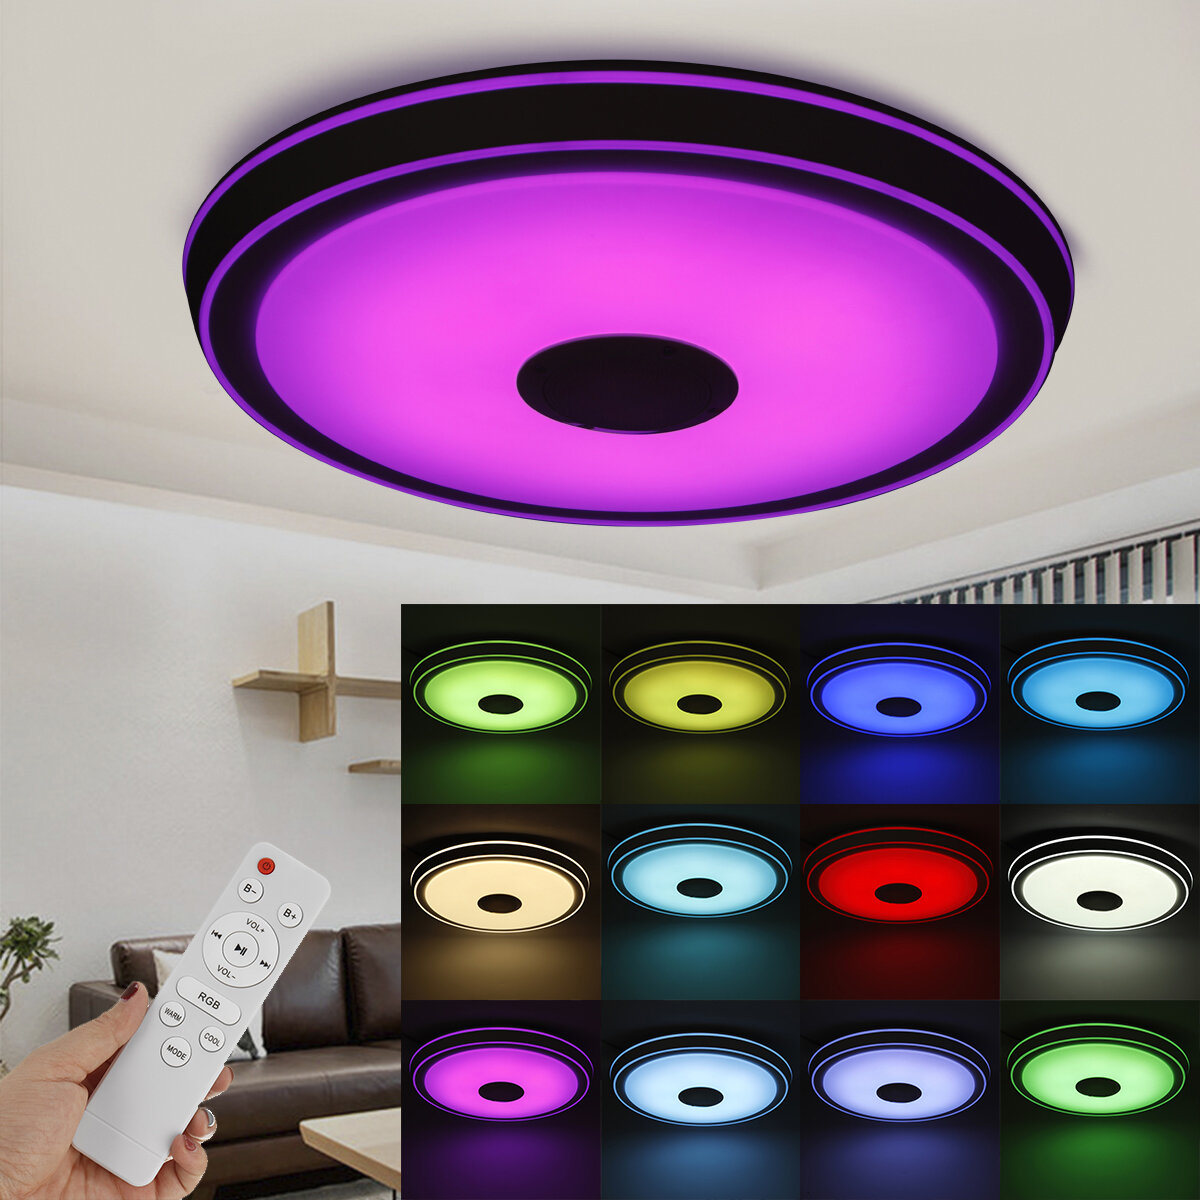 

50CM LED Ceiling Light RGB bluetooth Music Speaker Dimmer APP Remote Control Lamp